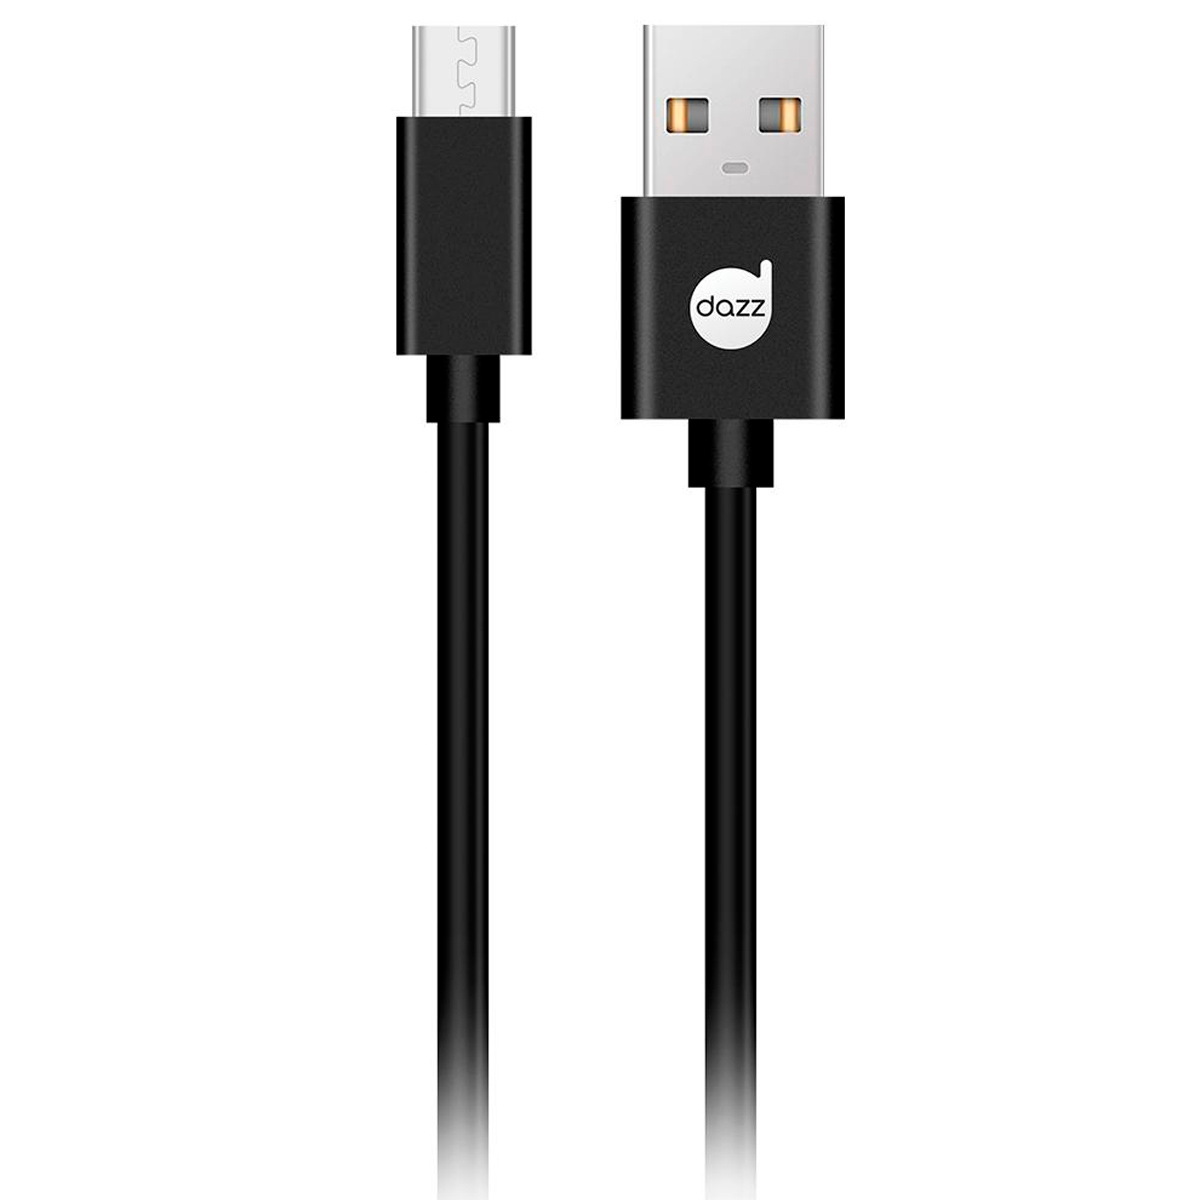 Cabo Micro USB para USB - 90cm - Preto - Dazz 6013633